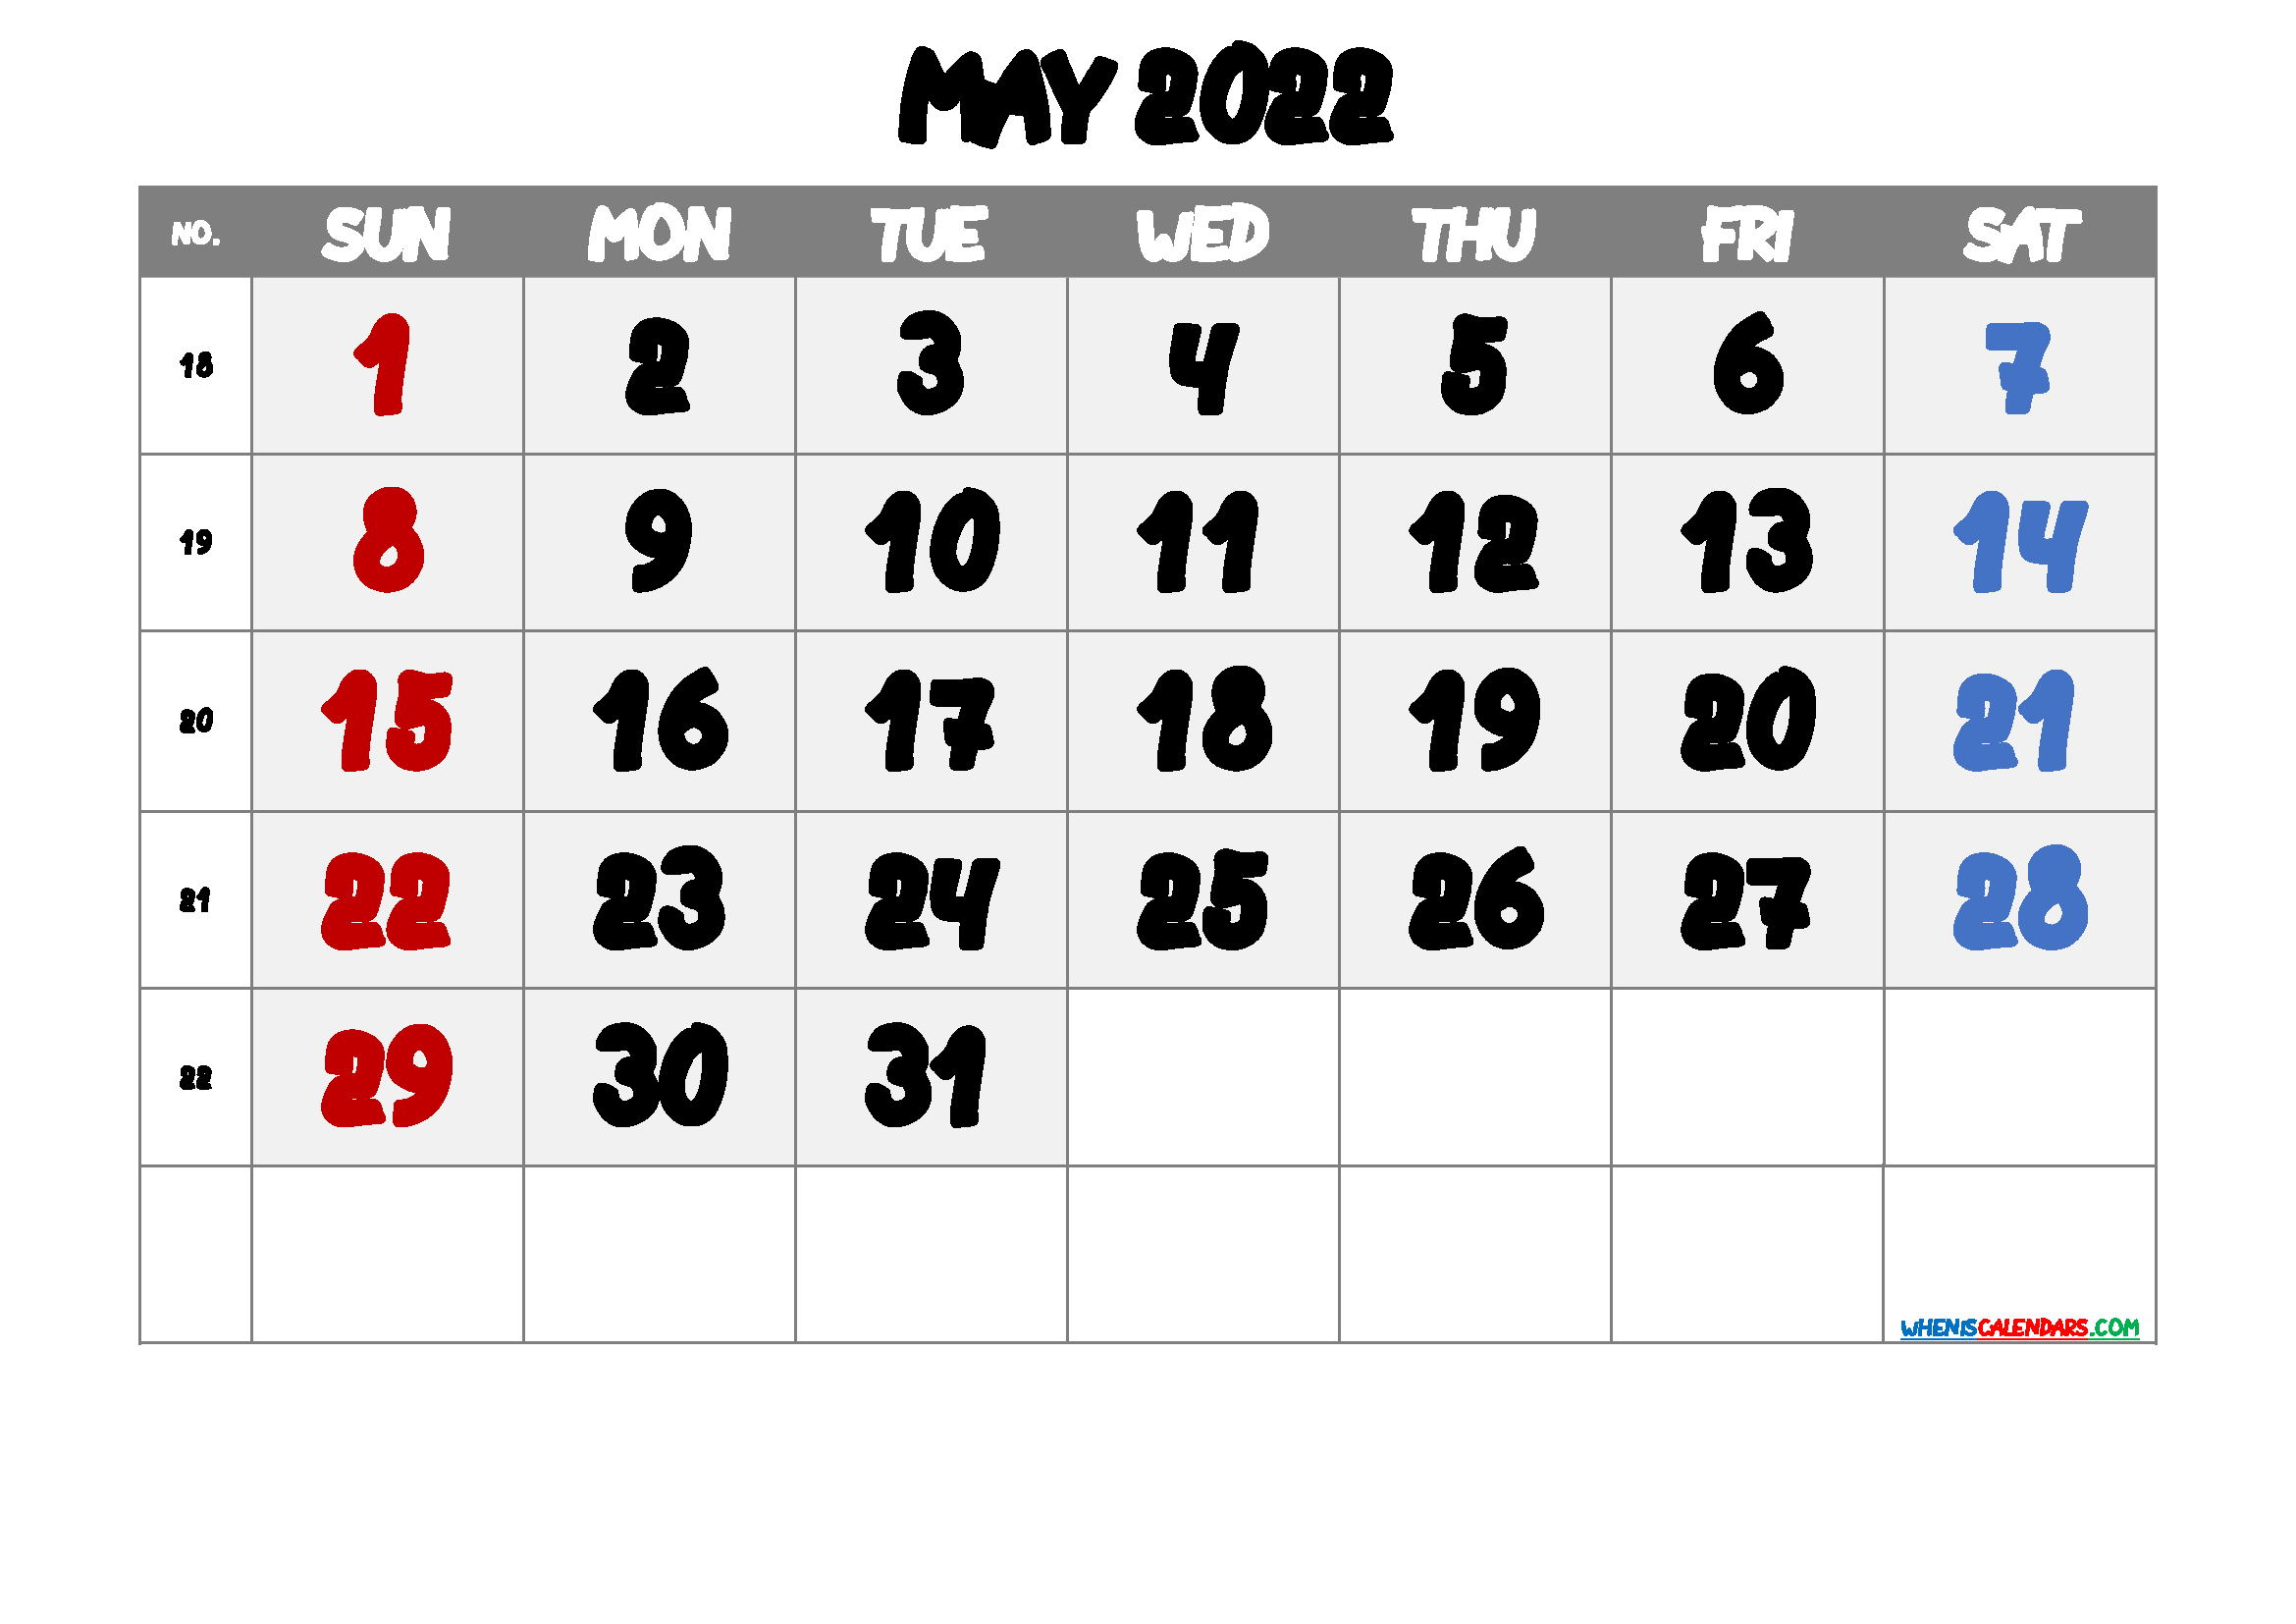 Free May 2022 Calendar PDF